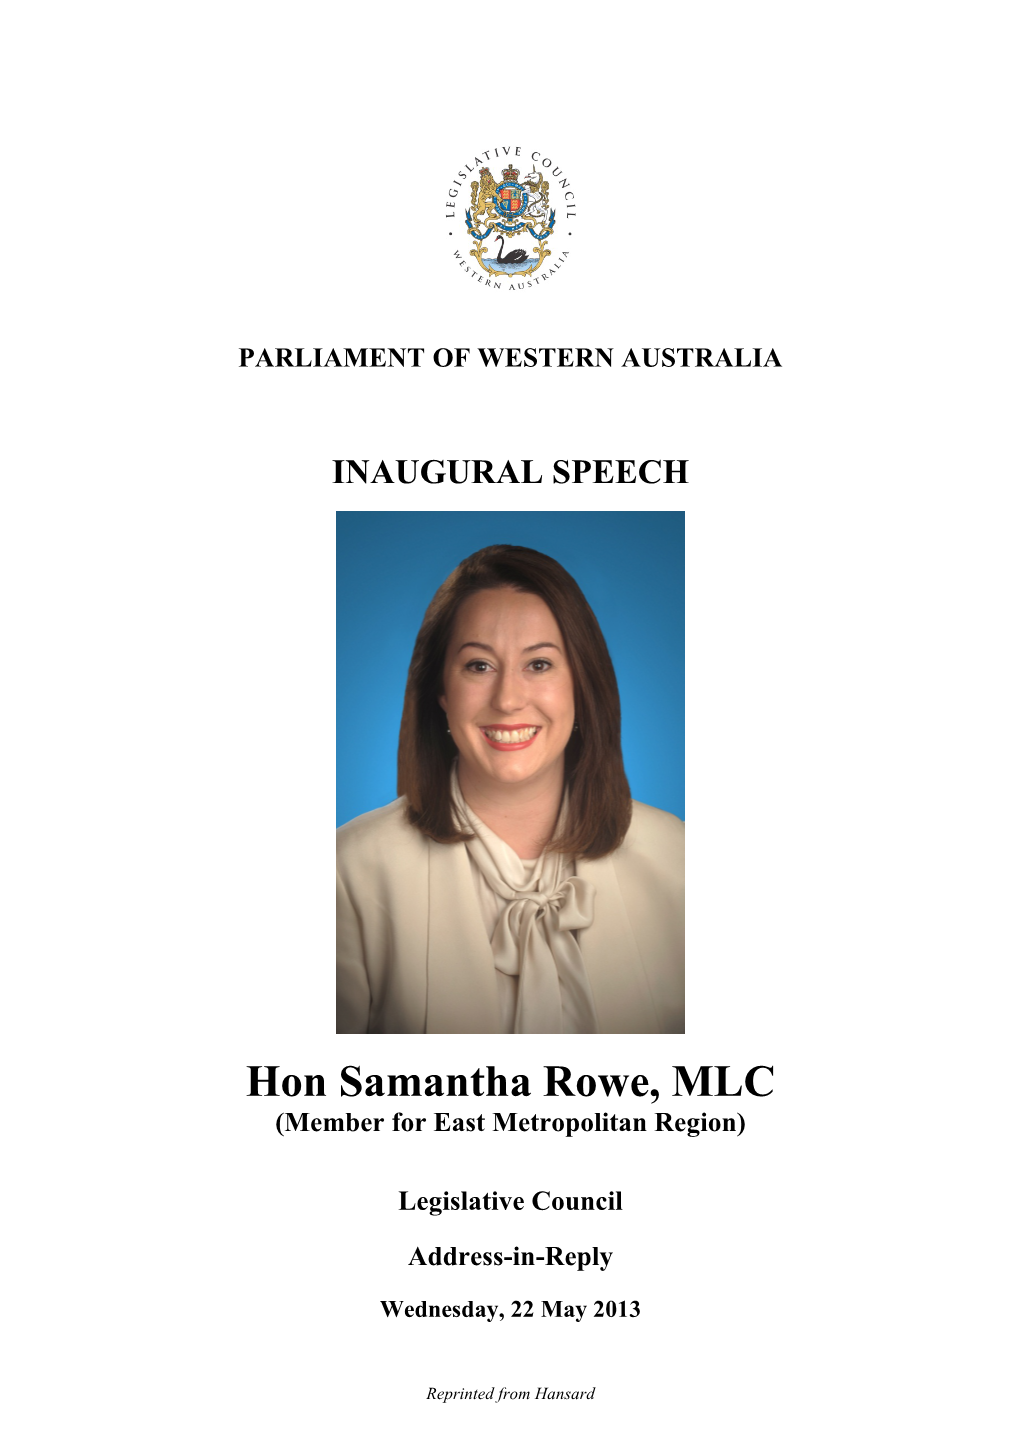 Hon Samantha Rowe, MLC (Member for East Metropolitan Region)